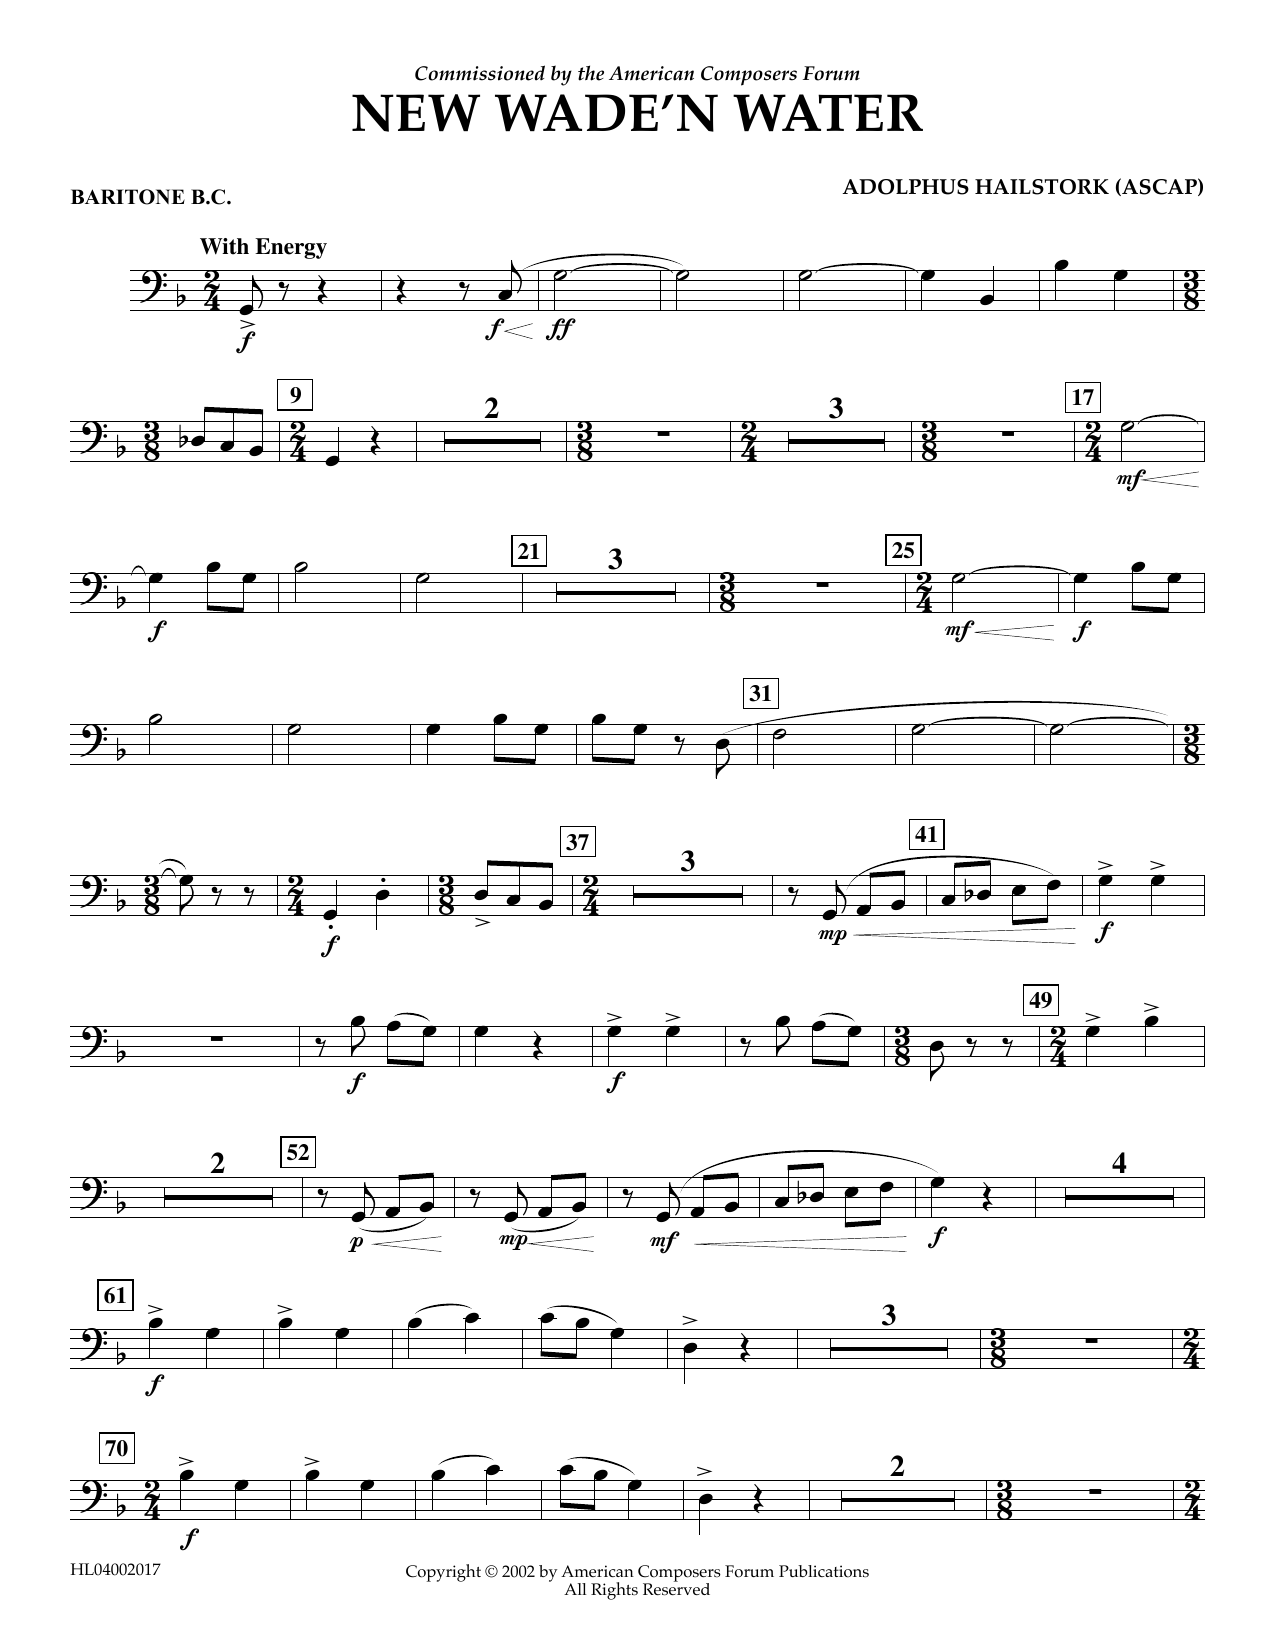 Download Adolphus Hailstork New Wade 'n Water - Euphonium in Bass C Sheet Music